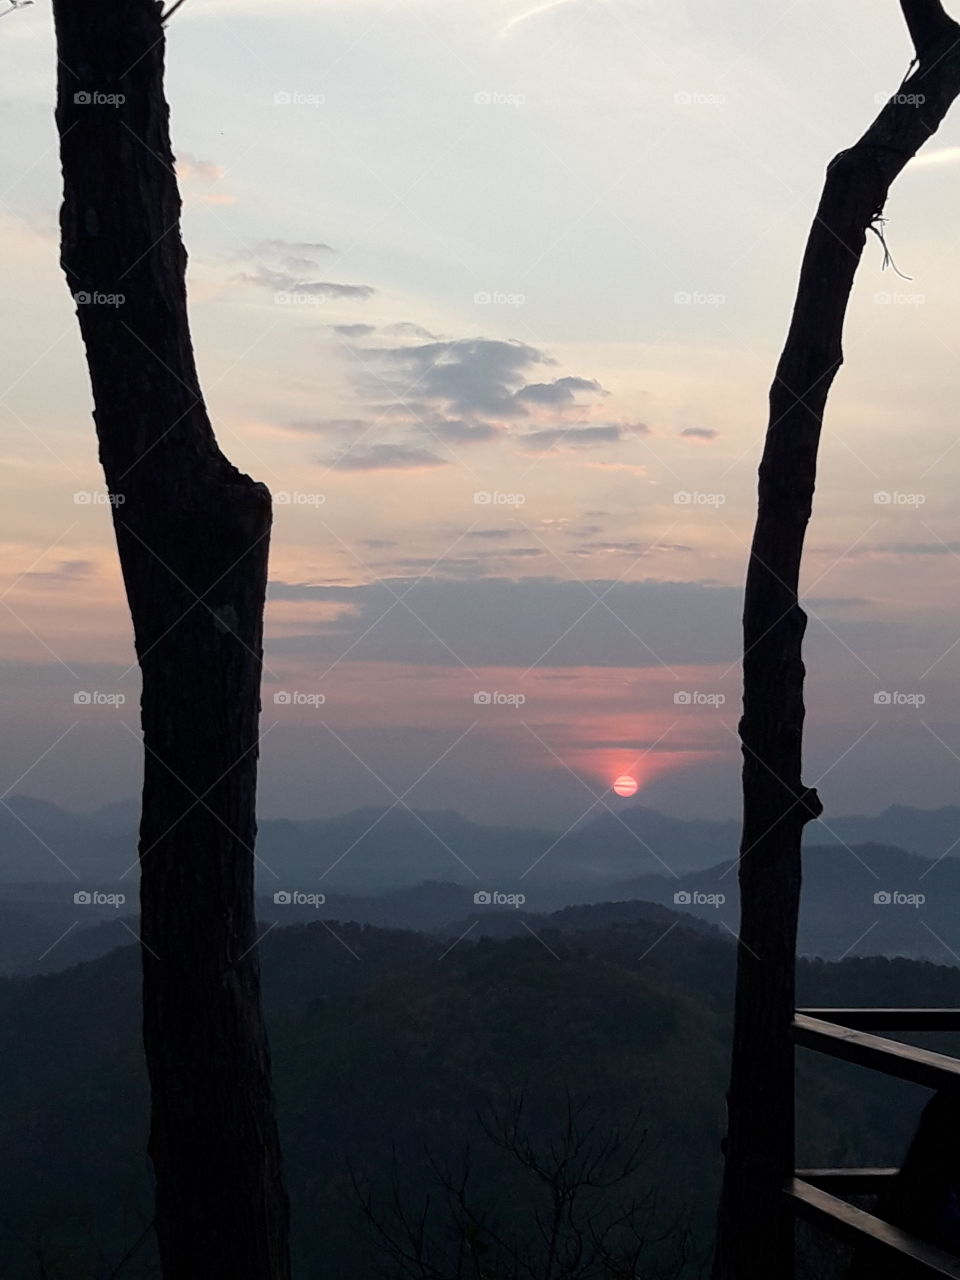 Phu Bo Bid Peak